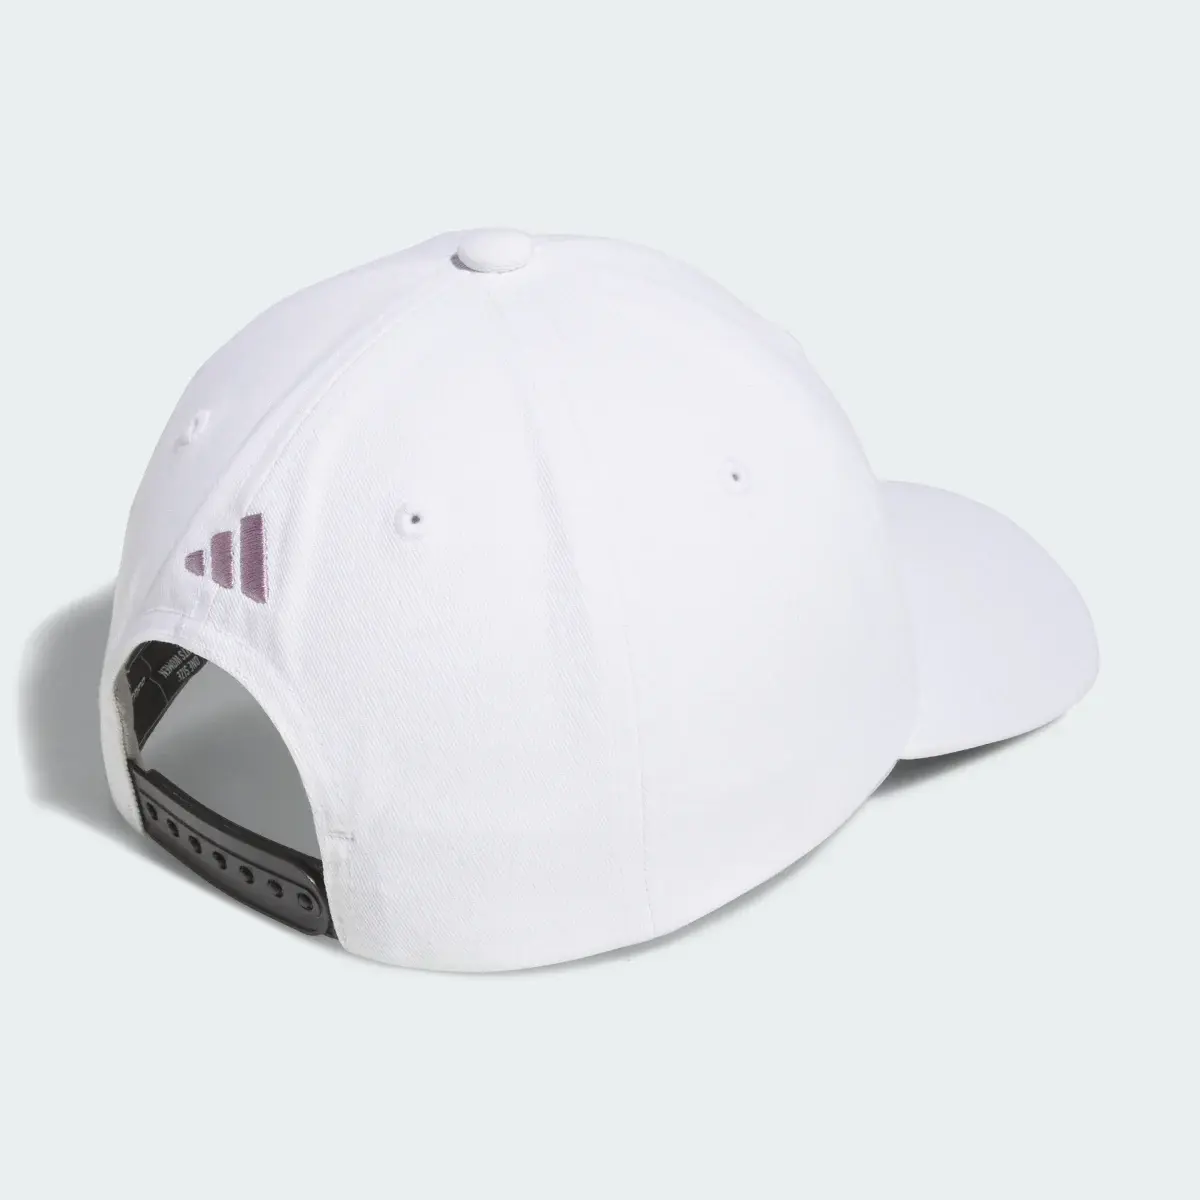 Adidas Women's Novelty Hat. 3